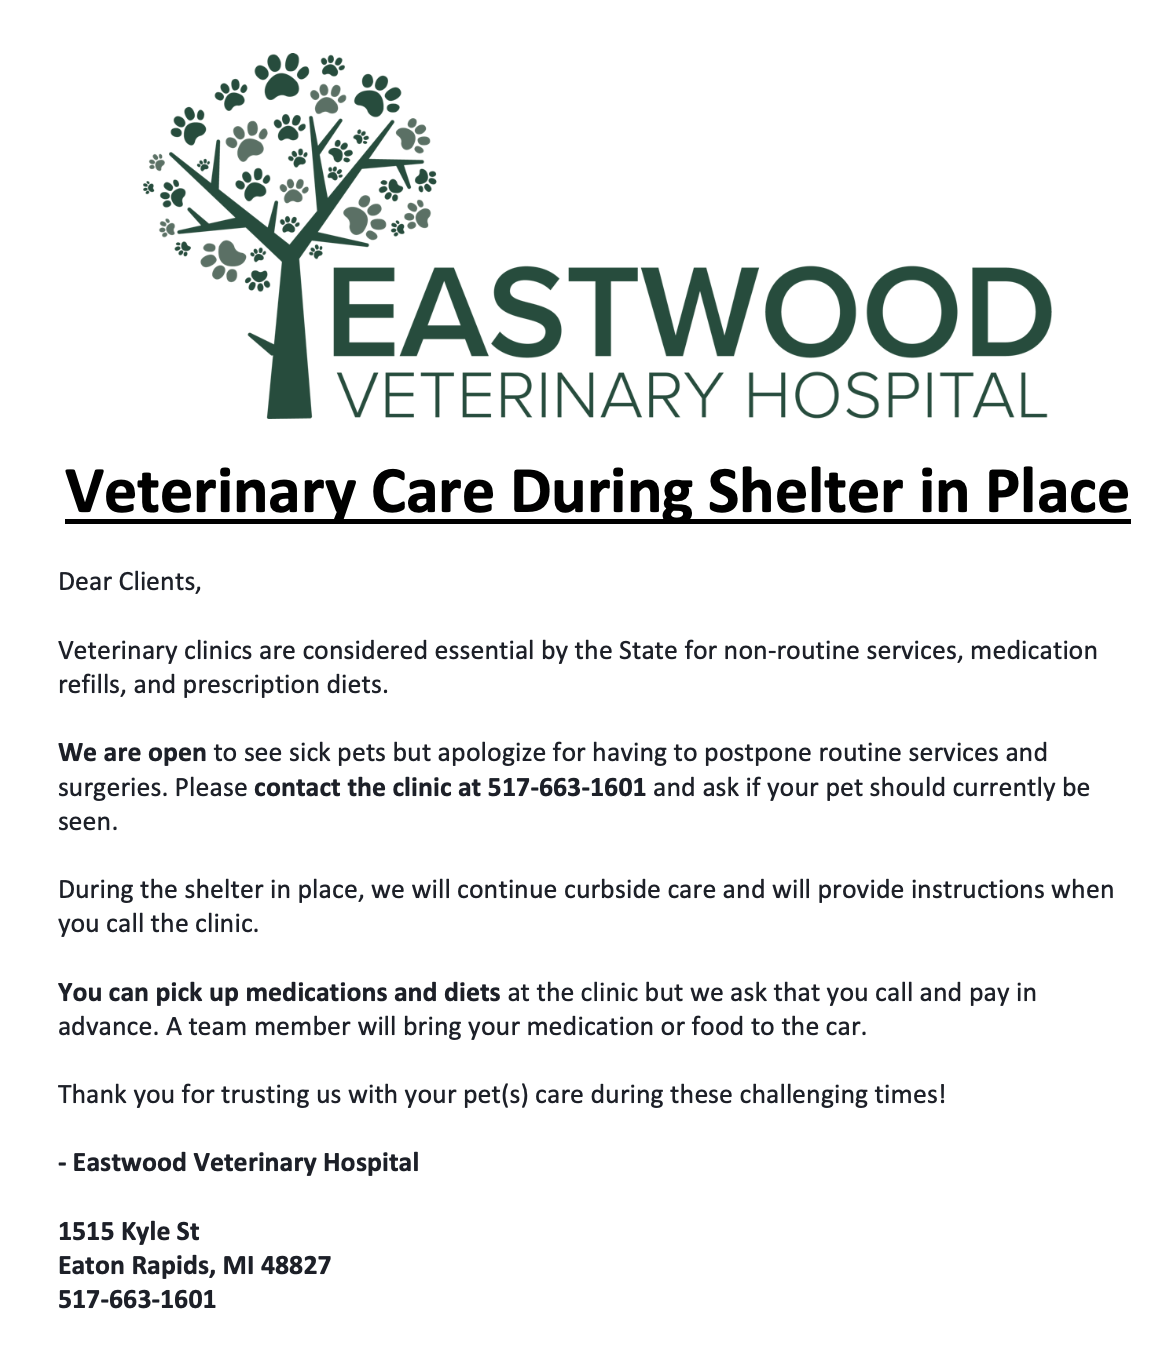 Eastwood Veterinary Hospital 1515 Kyle Ave, Eaton Rapids Michigan 48827